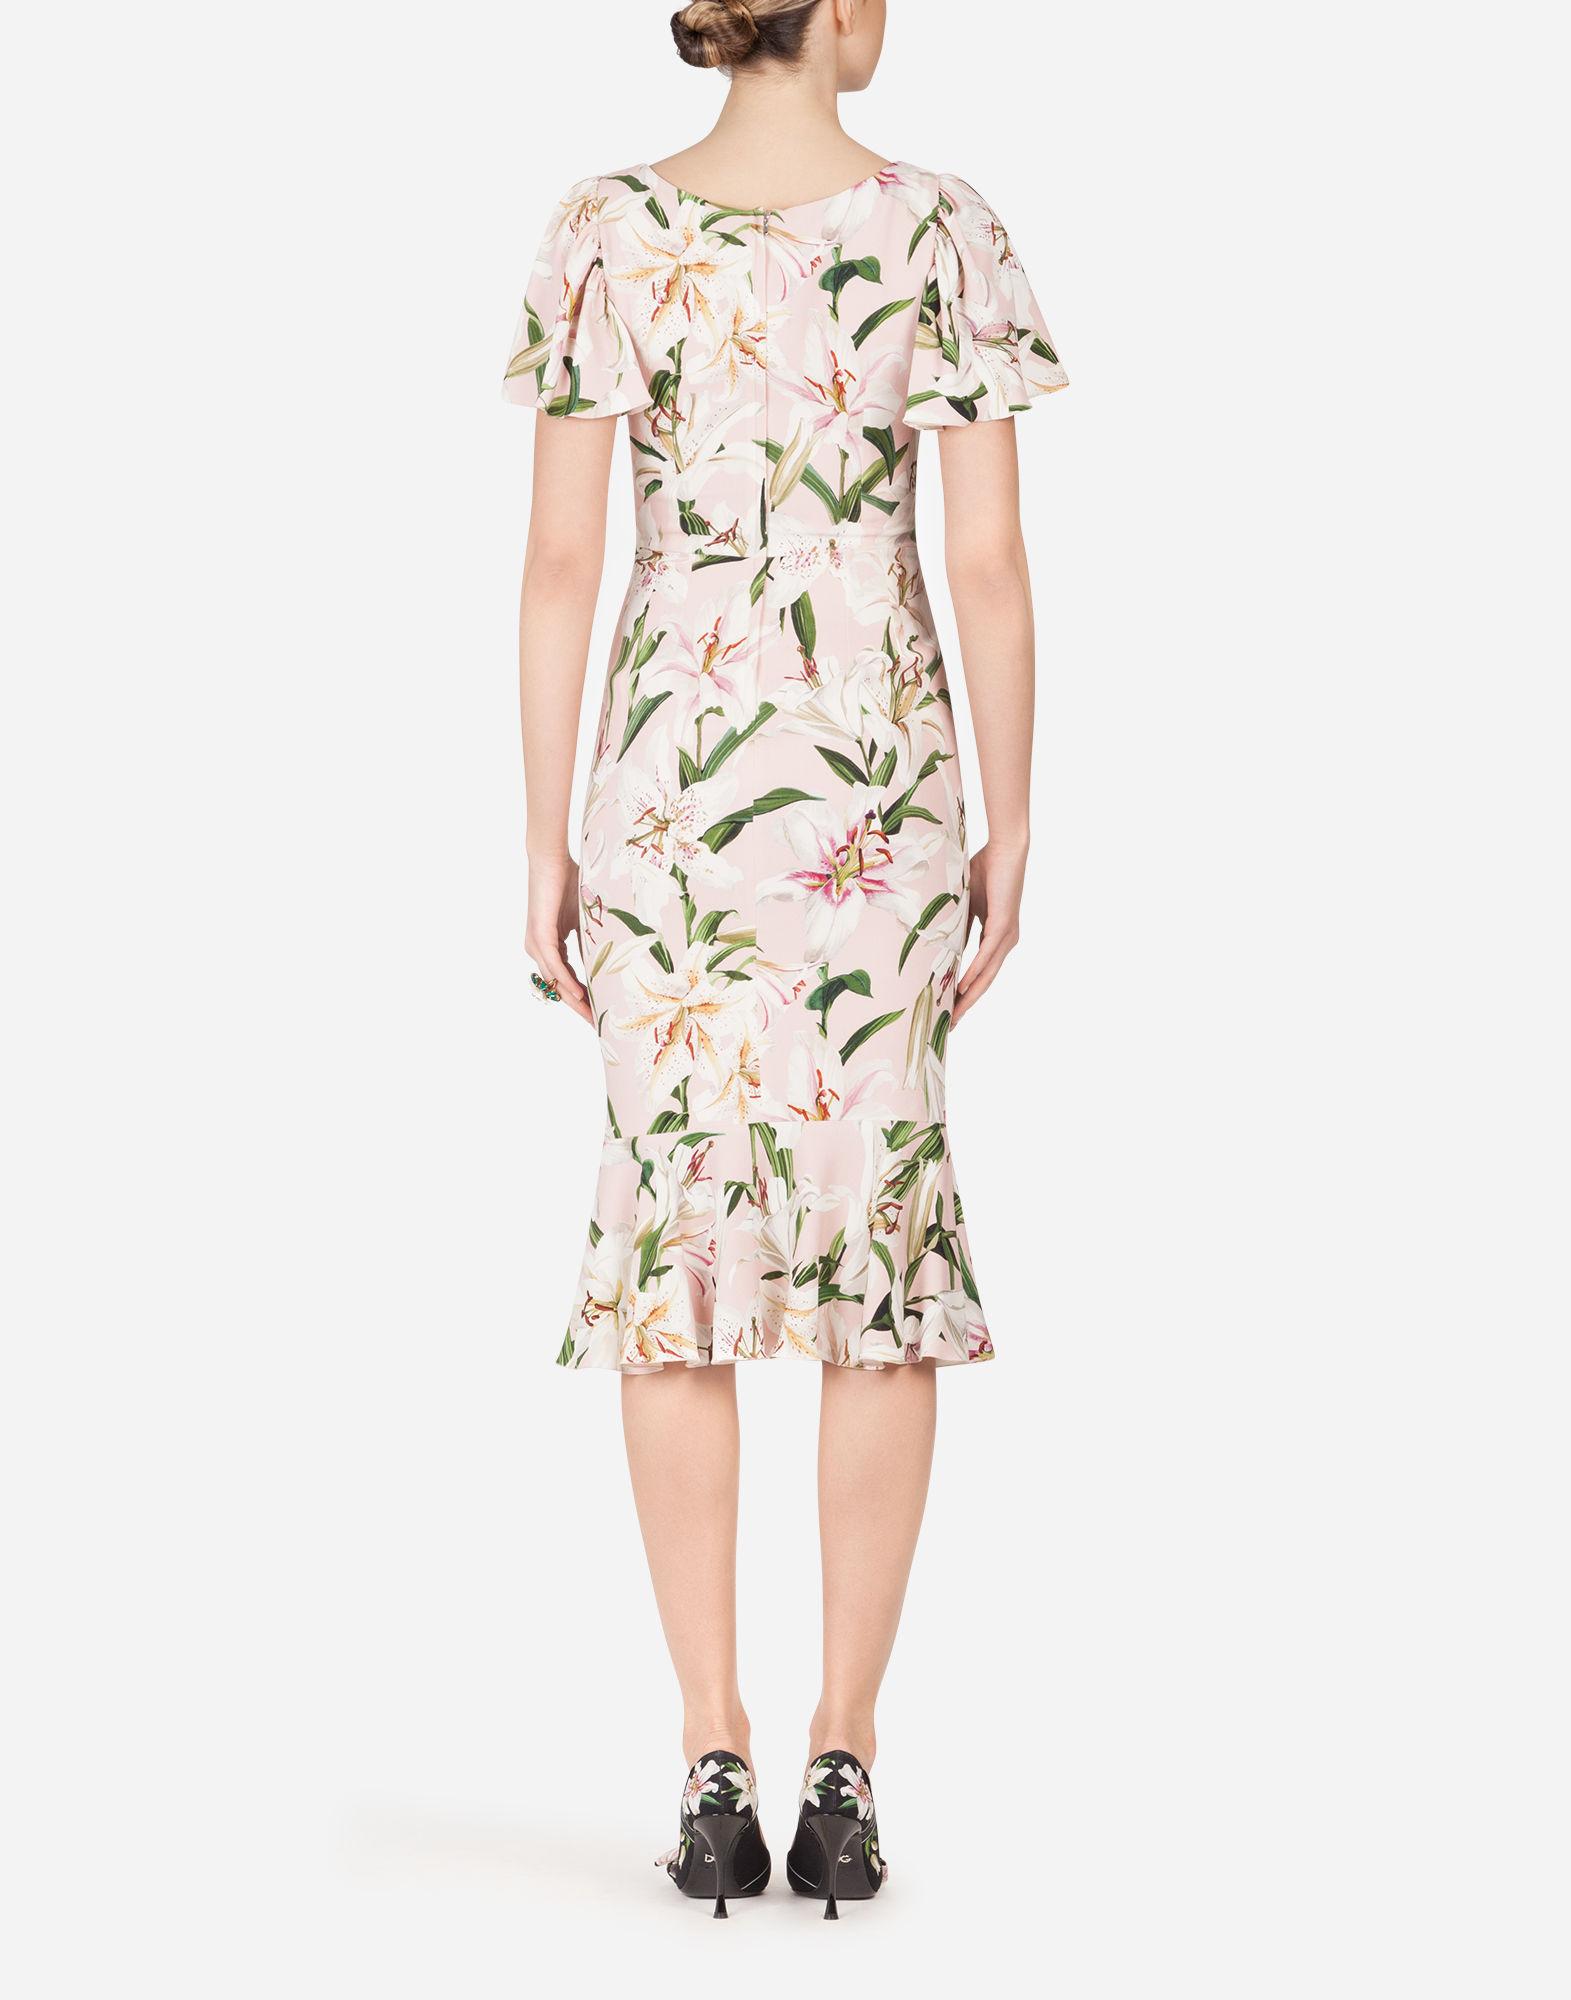 Dolce & Gabbana Lily-print Cady Midi Dress in Floral Print (Pink) - Lyst